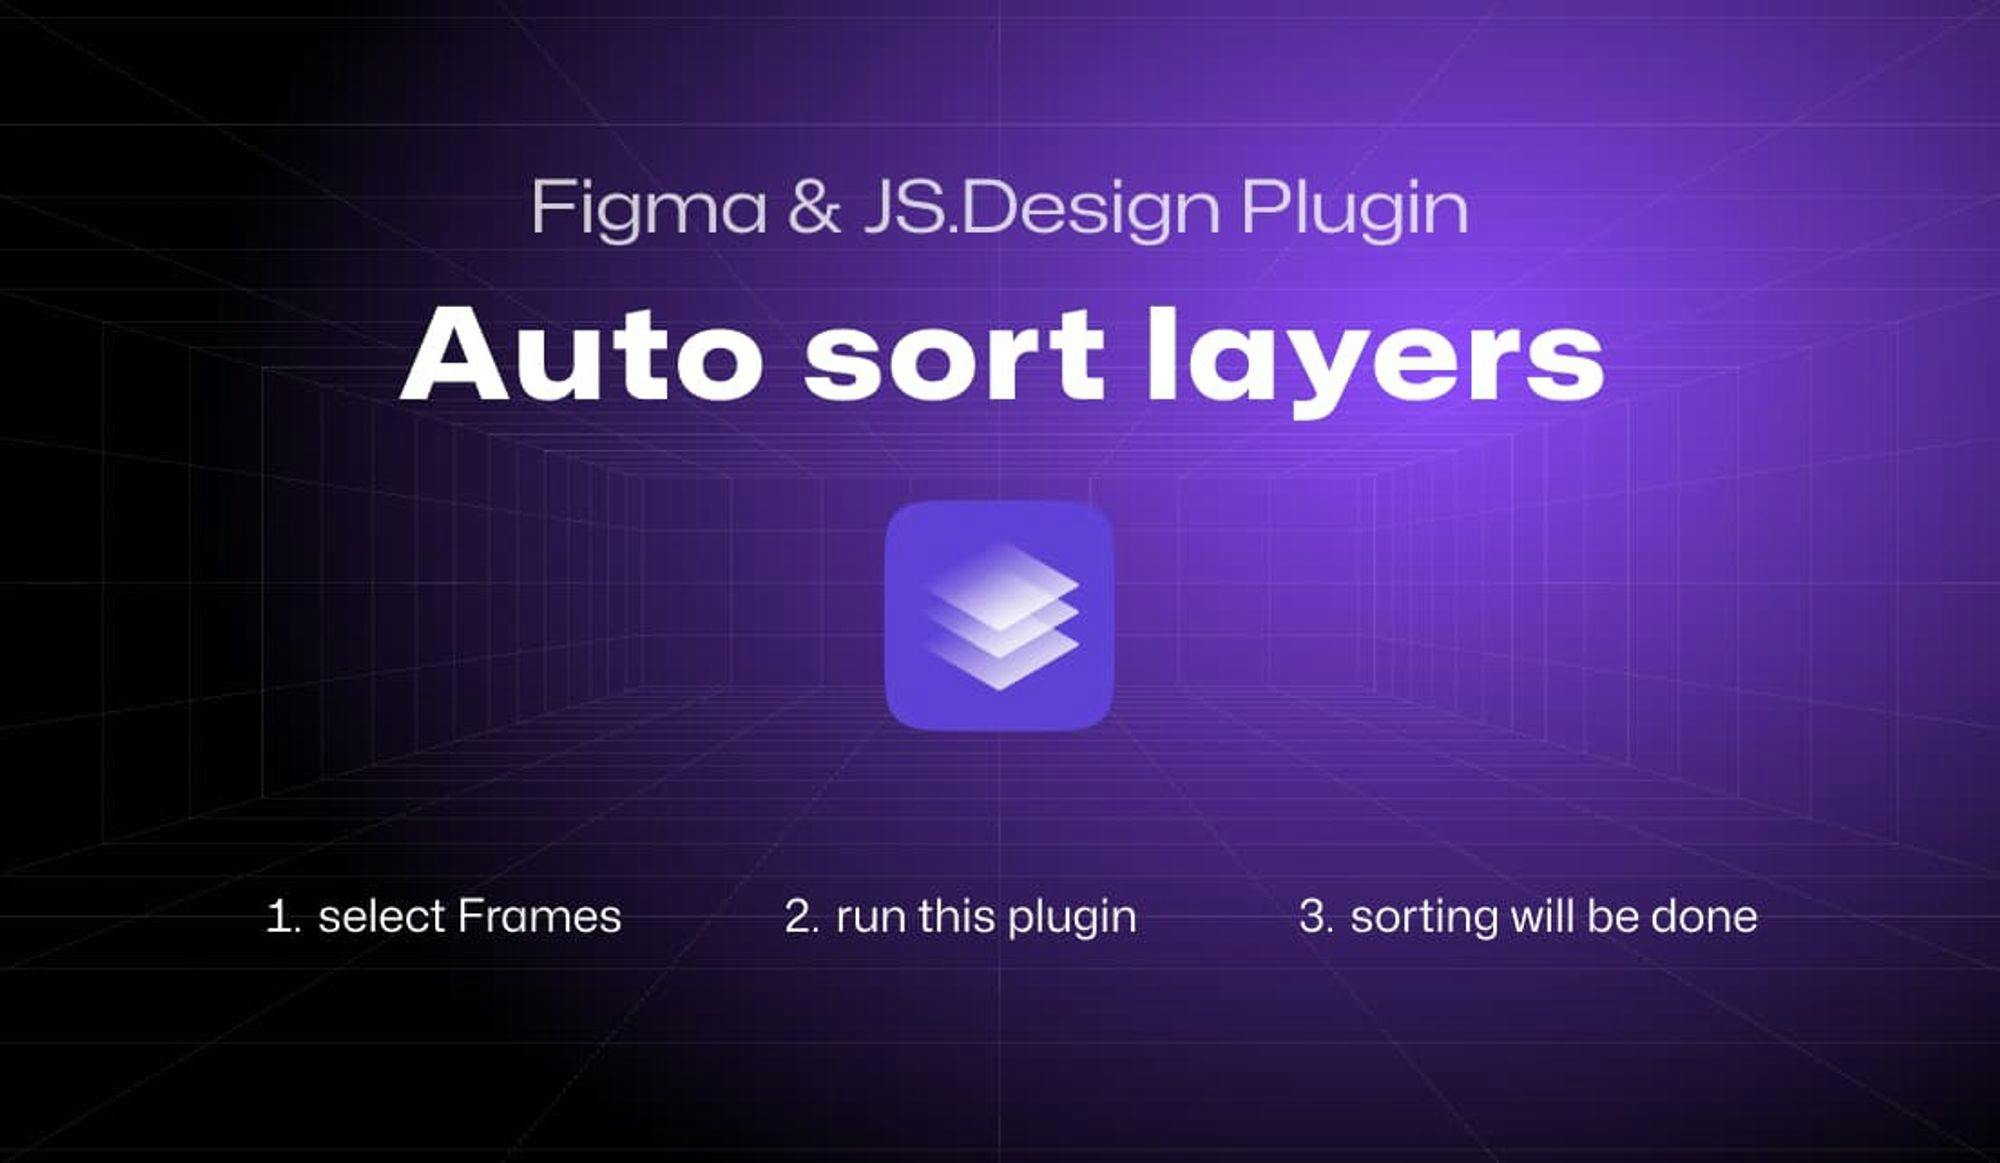 我做了一个Figma 小插件-Auto sort layers